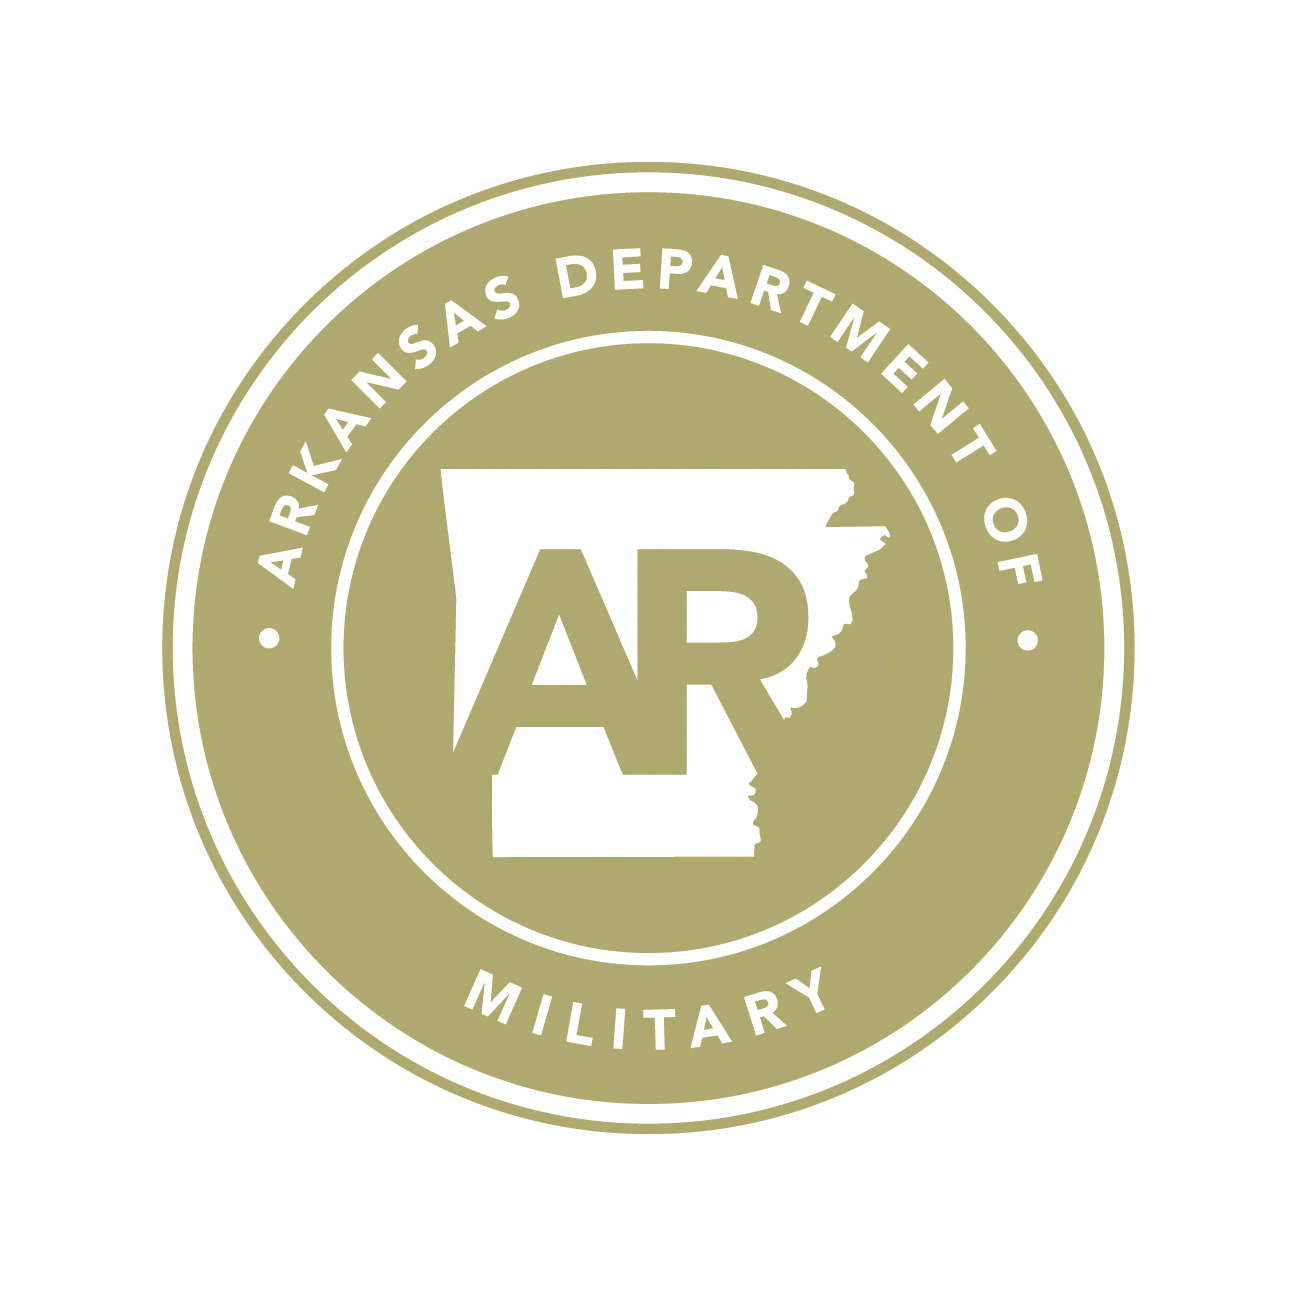 Arkansas Department of the Military